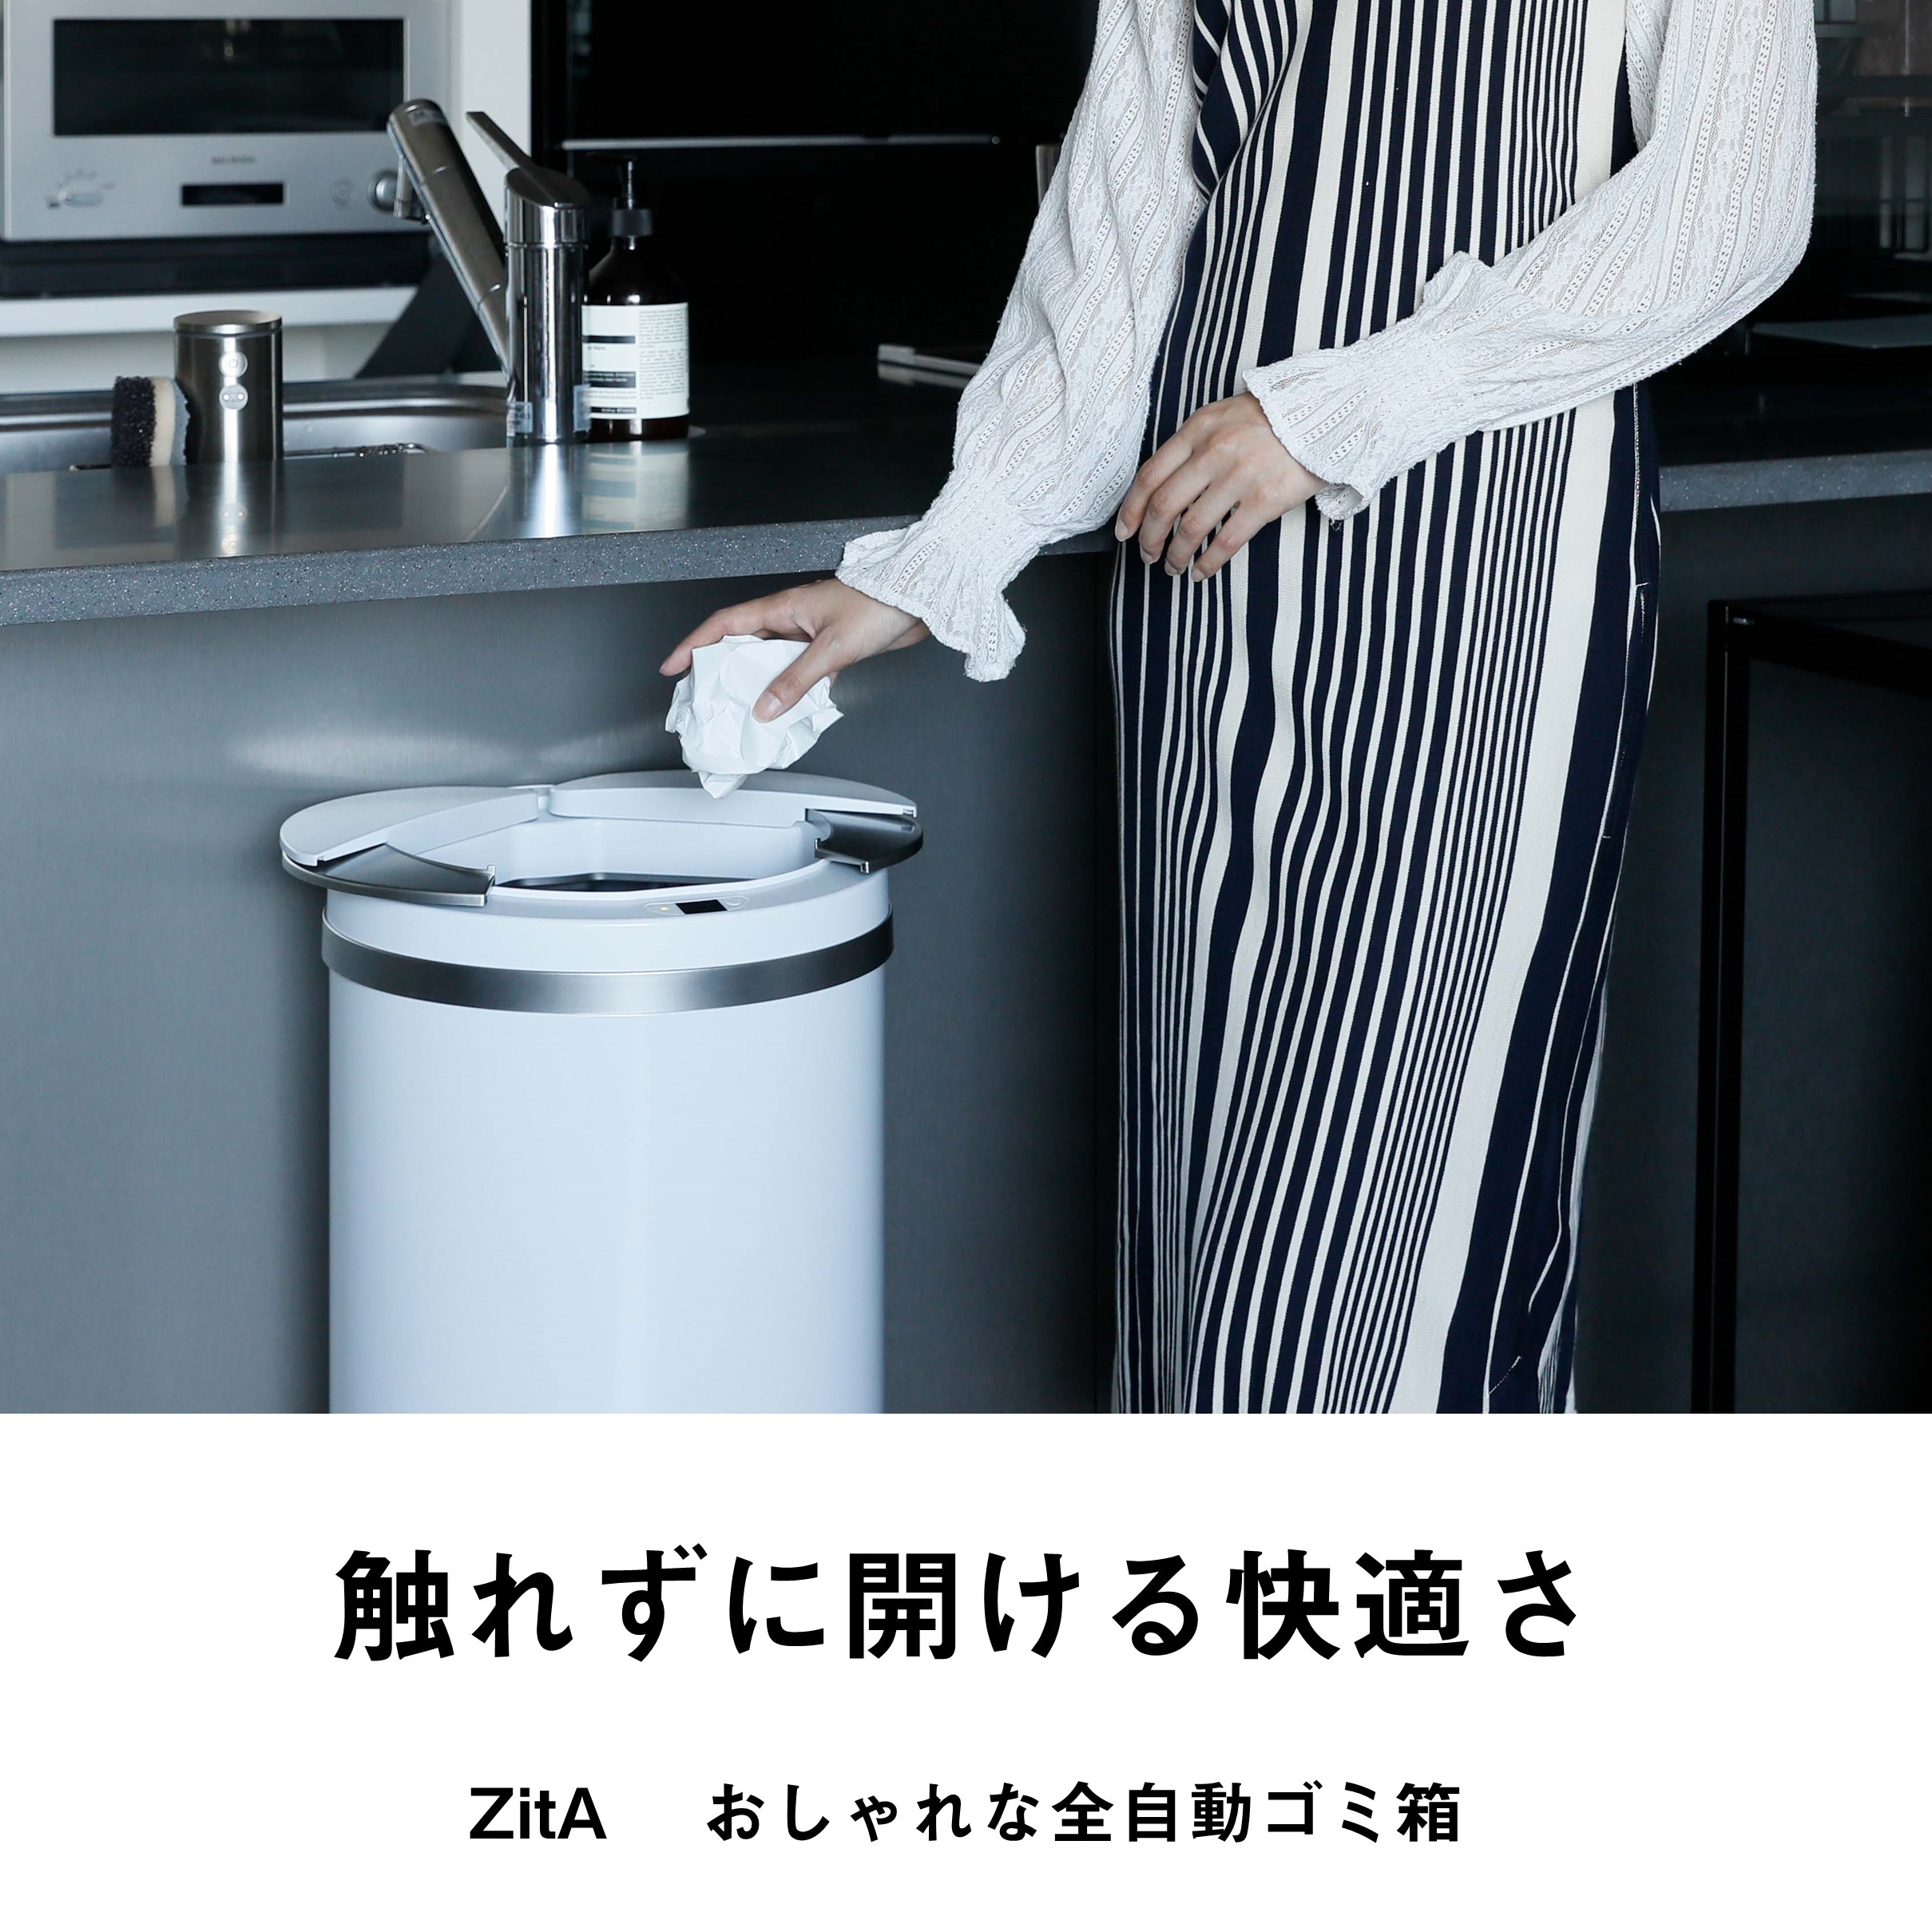 ZitA / おしゃれな全自動ゴミ箱